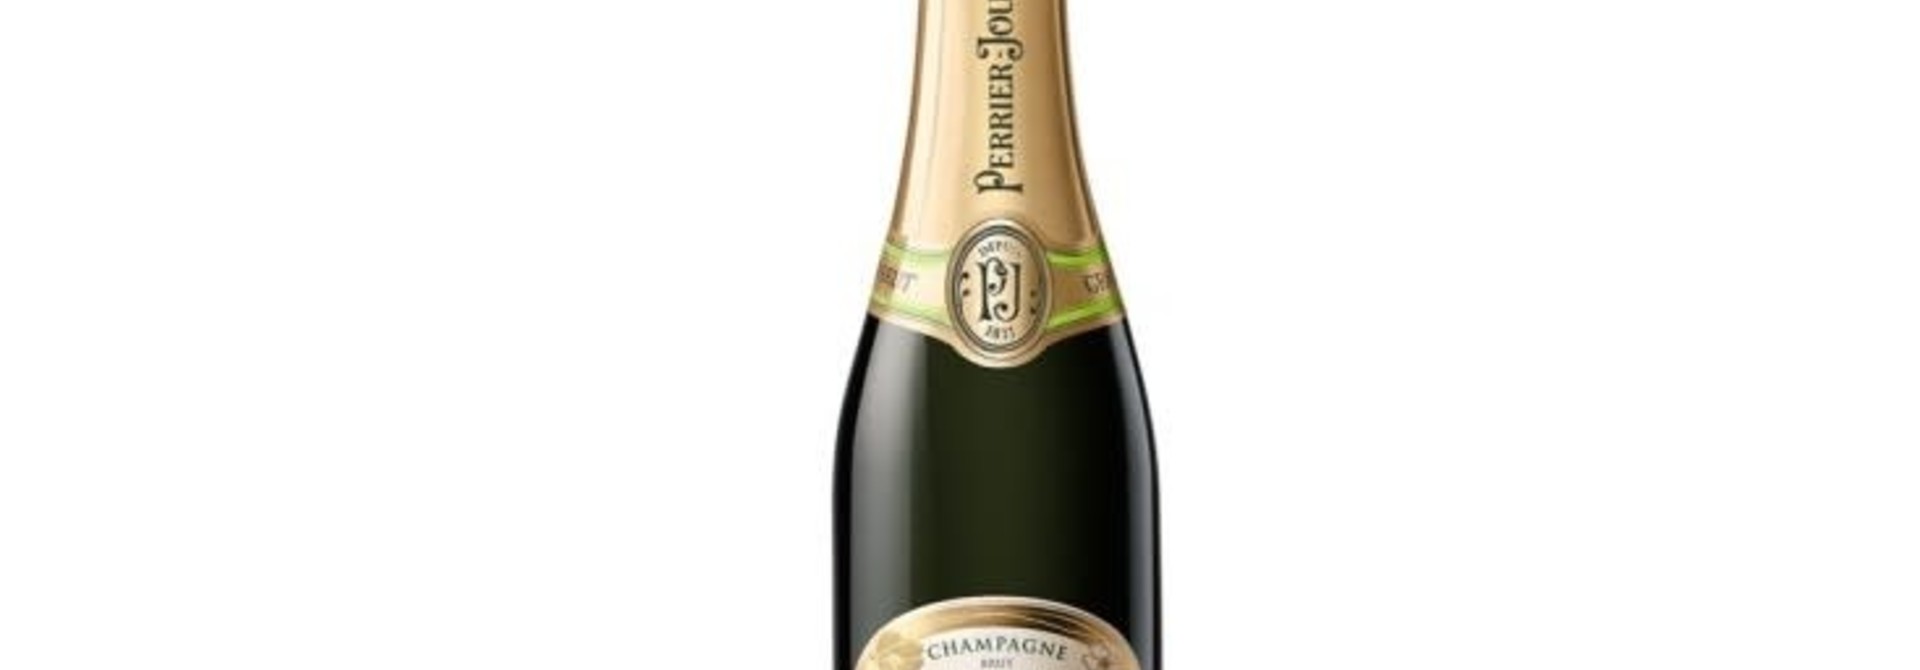 Champagne Perrier Jouet, grand brut 370ml